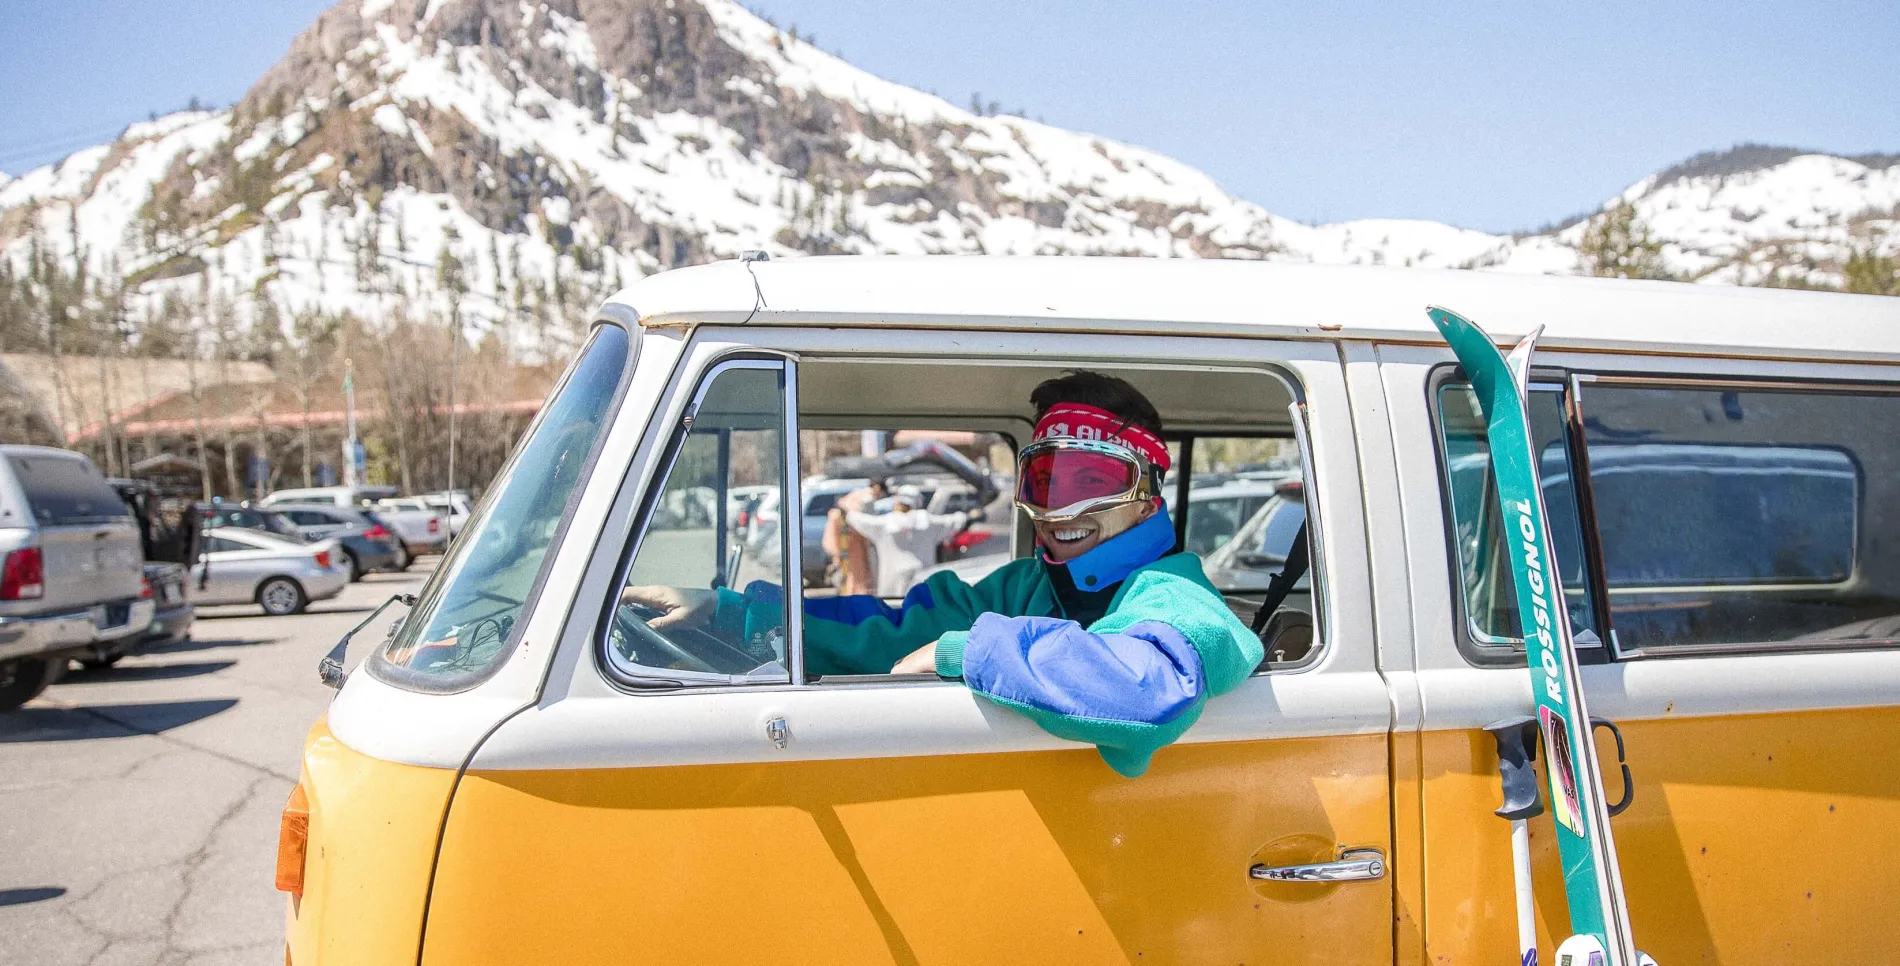 Spring skier in a yellow van